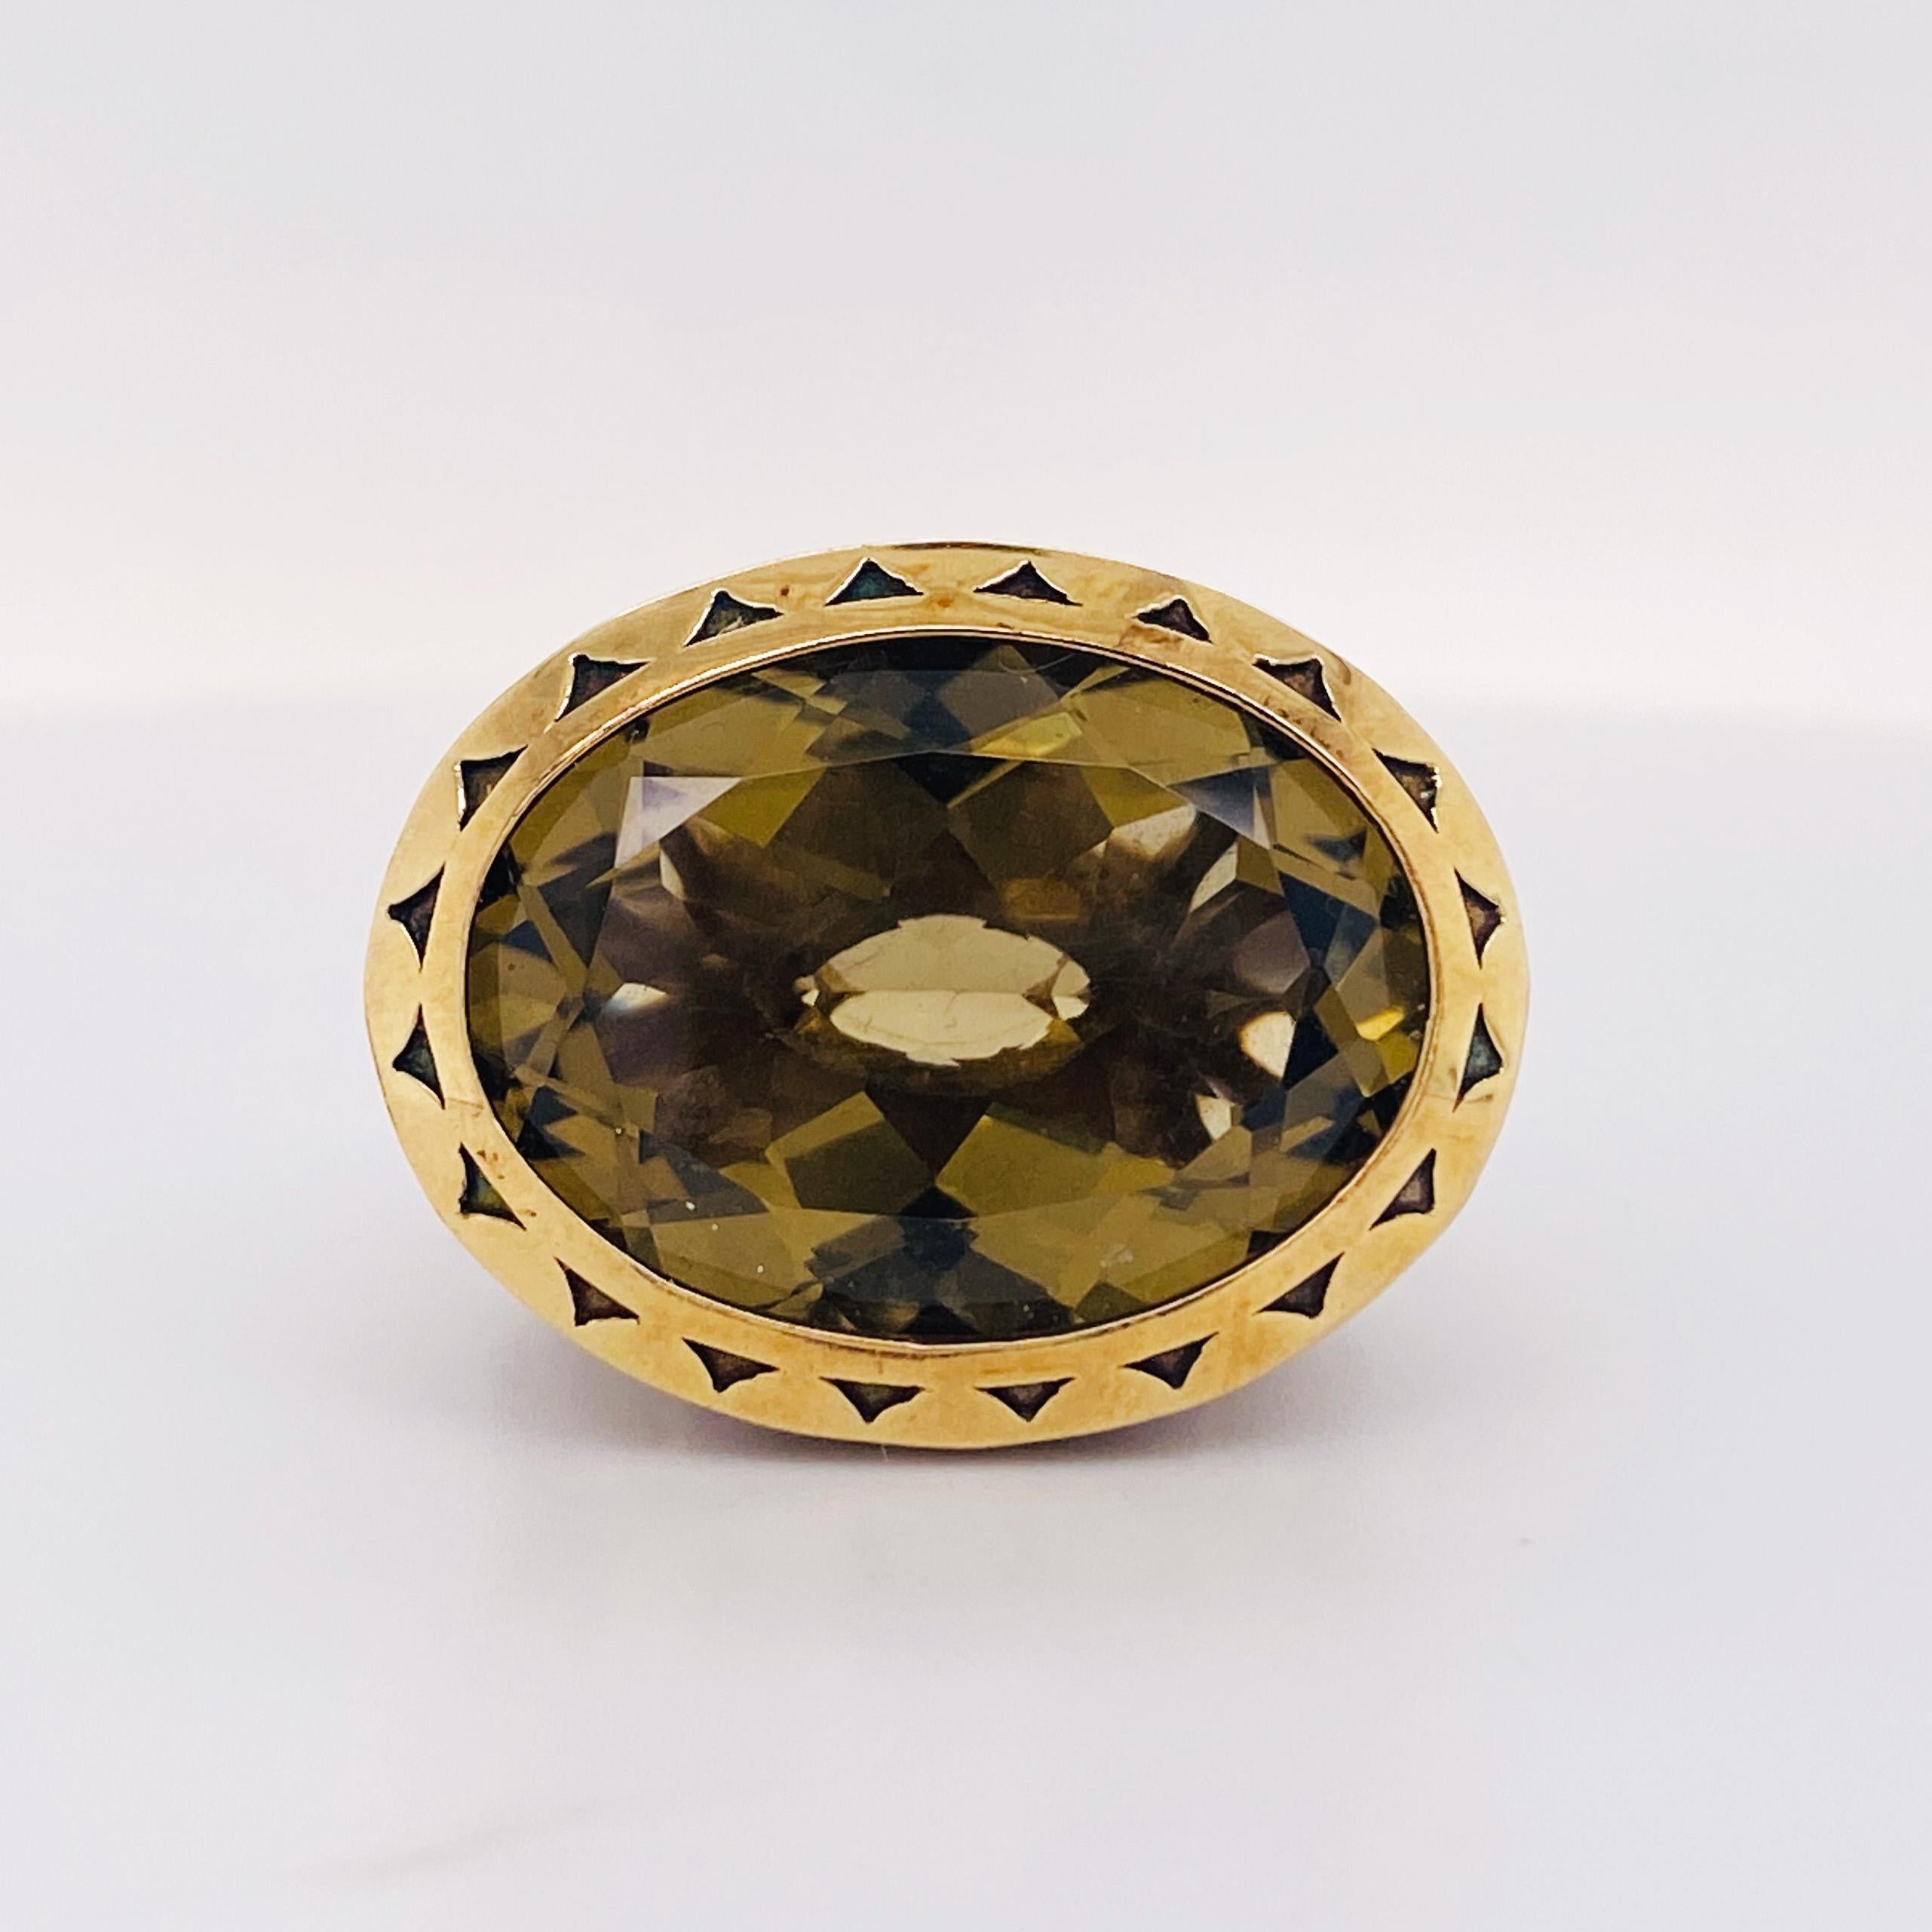 This authentic and original Tacori ring has a 15.70 carat olive genuine quartz. The quartz ring comes with a Tacori jewelry pouch, the Tacori 18K 925 